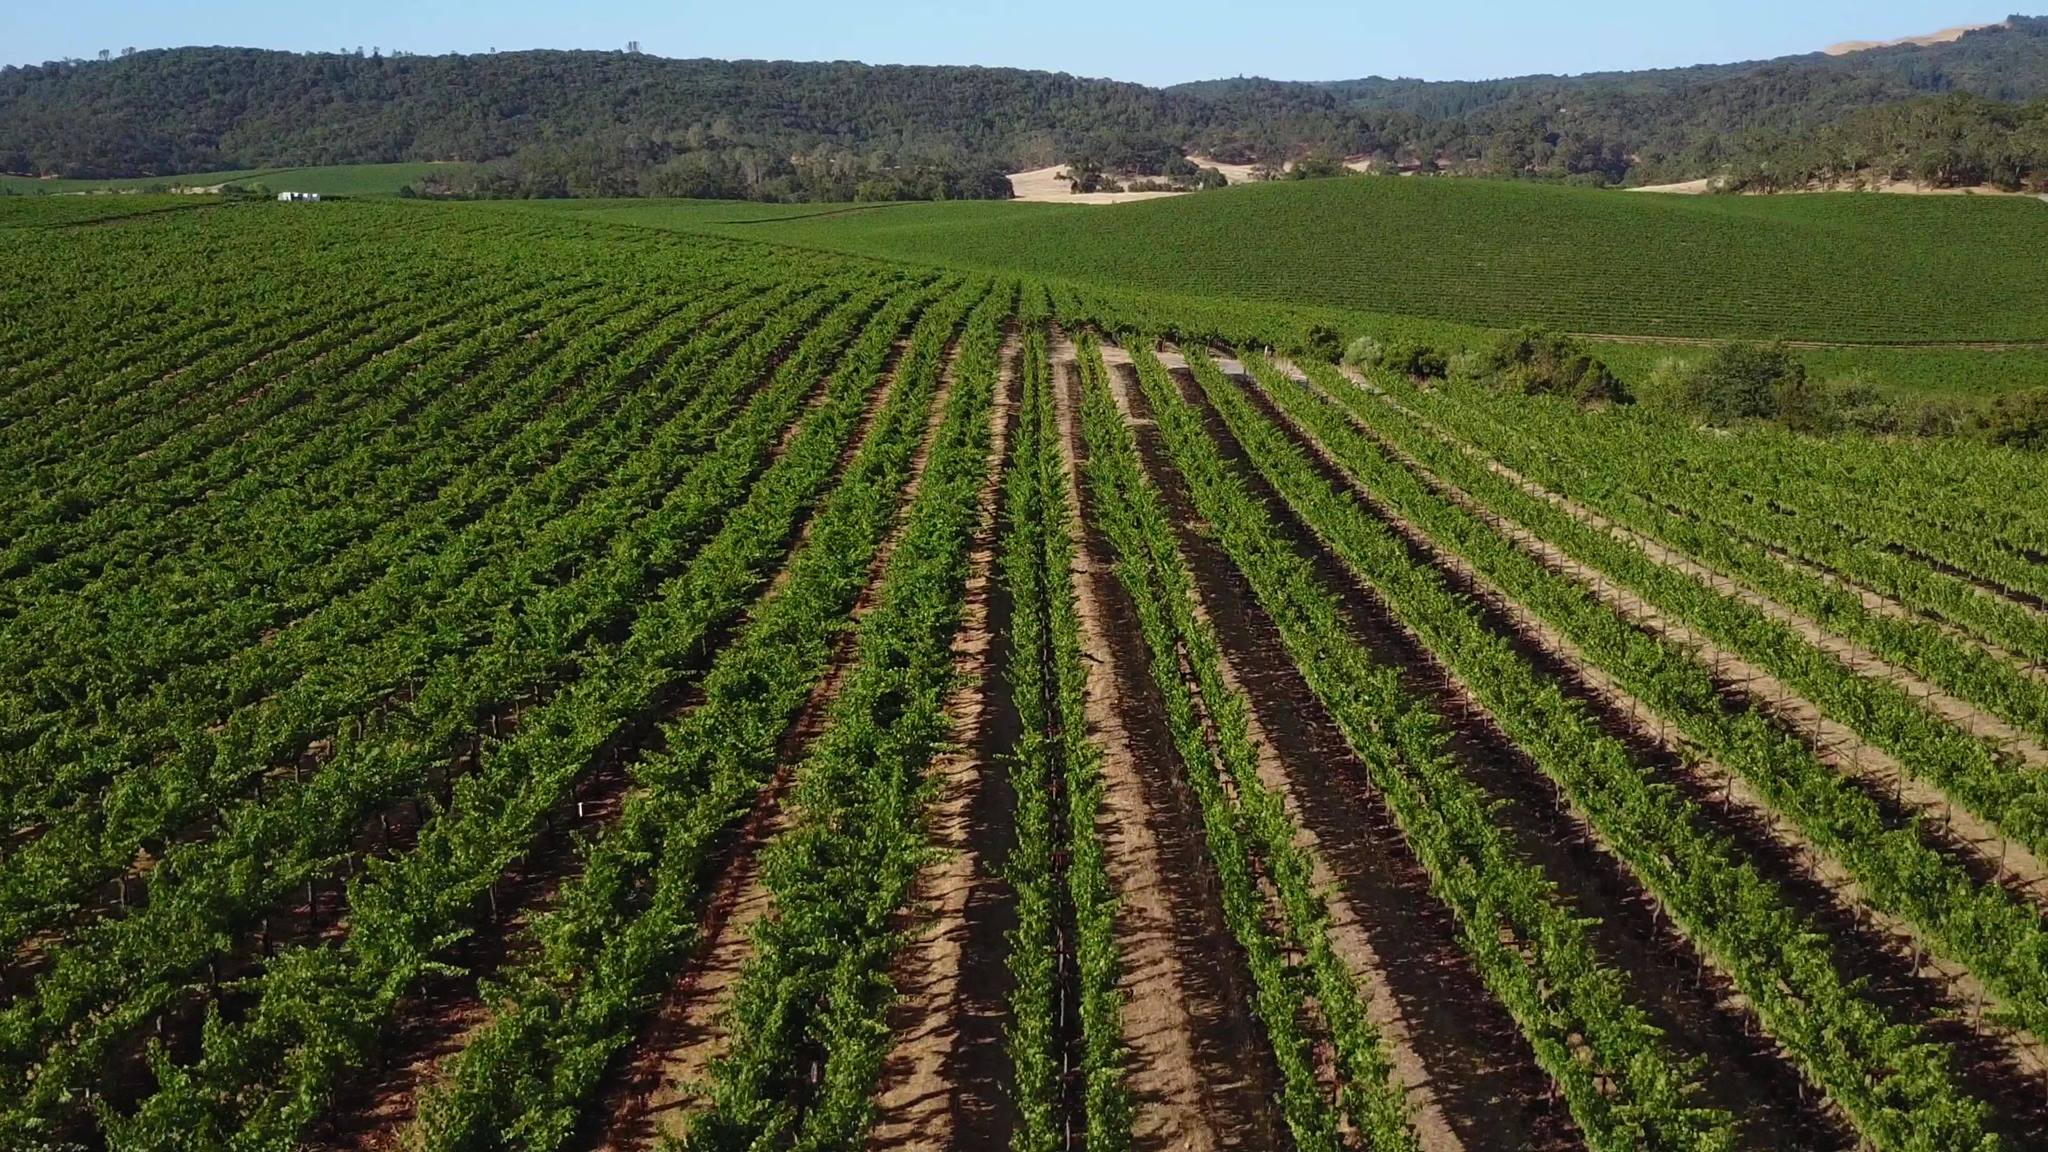 Green vineyards in Cloverdale, CA